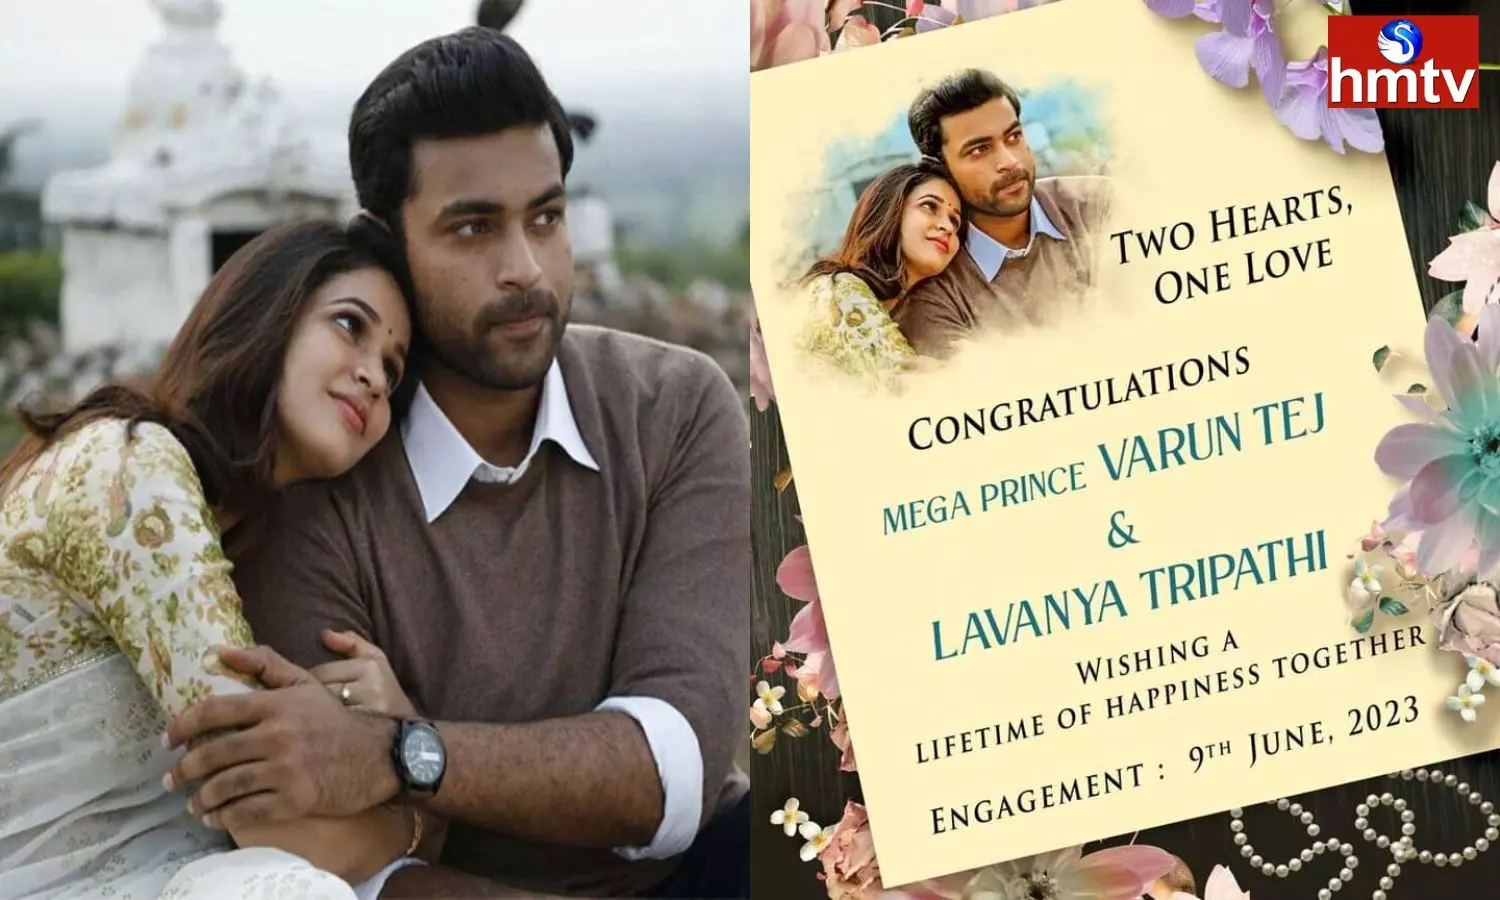 Varun Tej Lavanya Tripathi Engagement Invitation Card Viral in Social Media